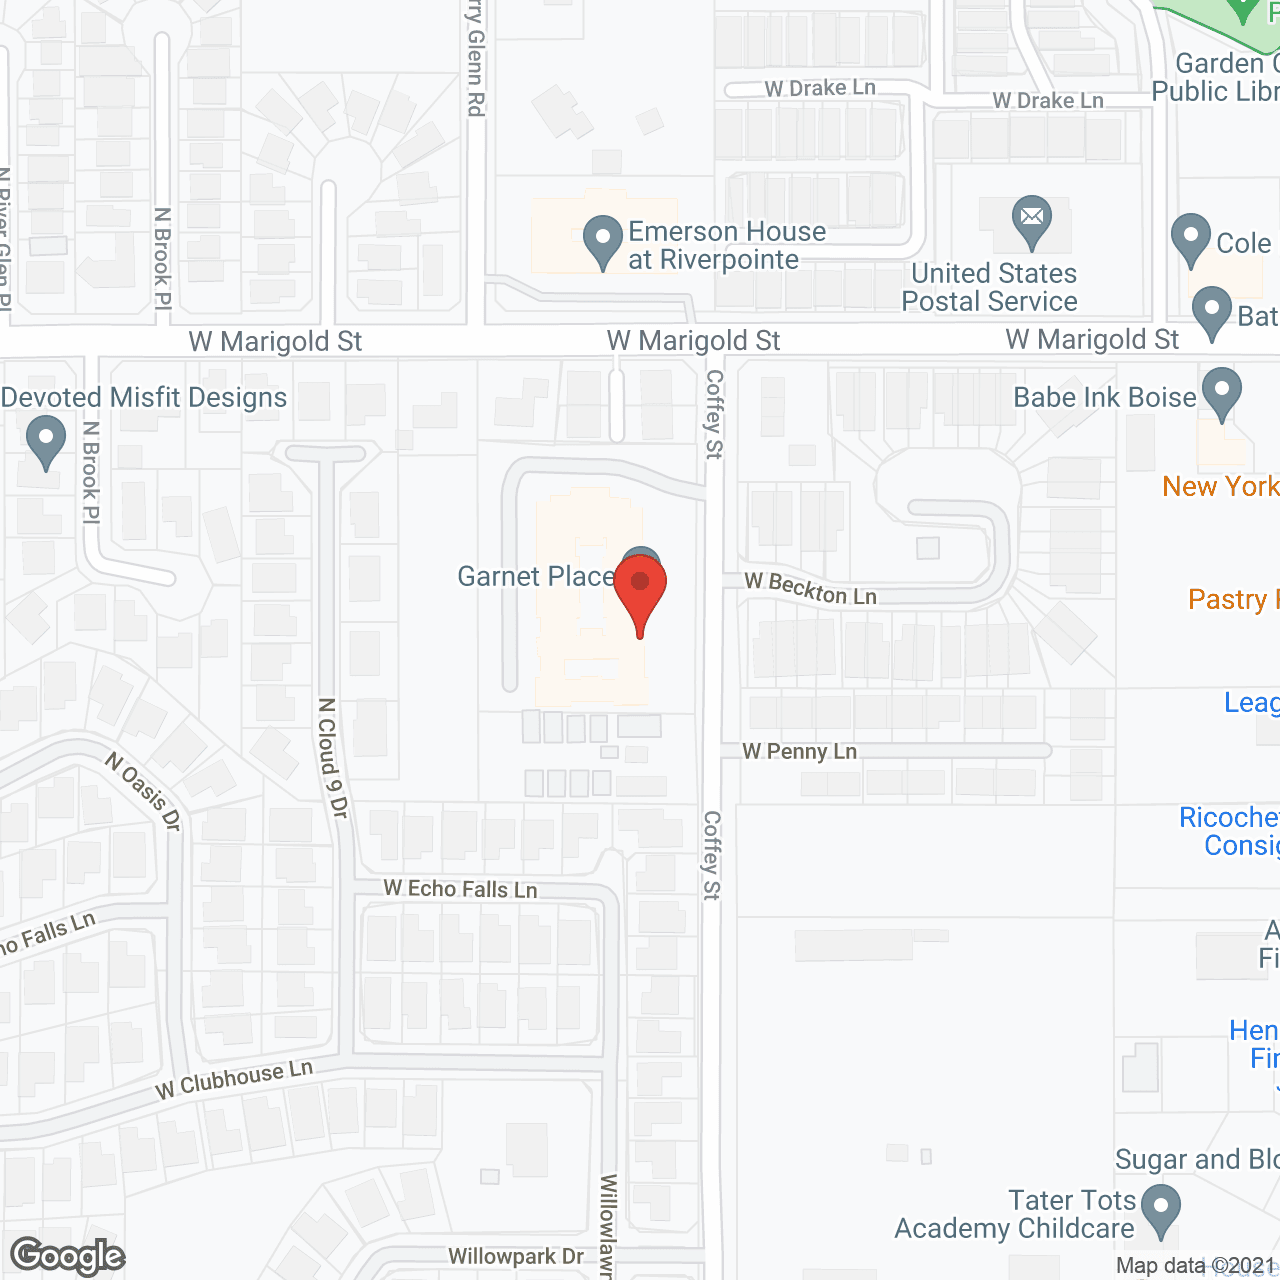 Avista Garden City in google map